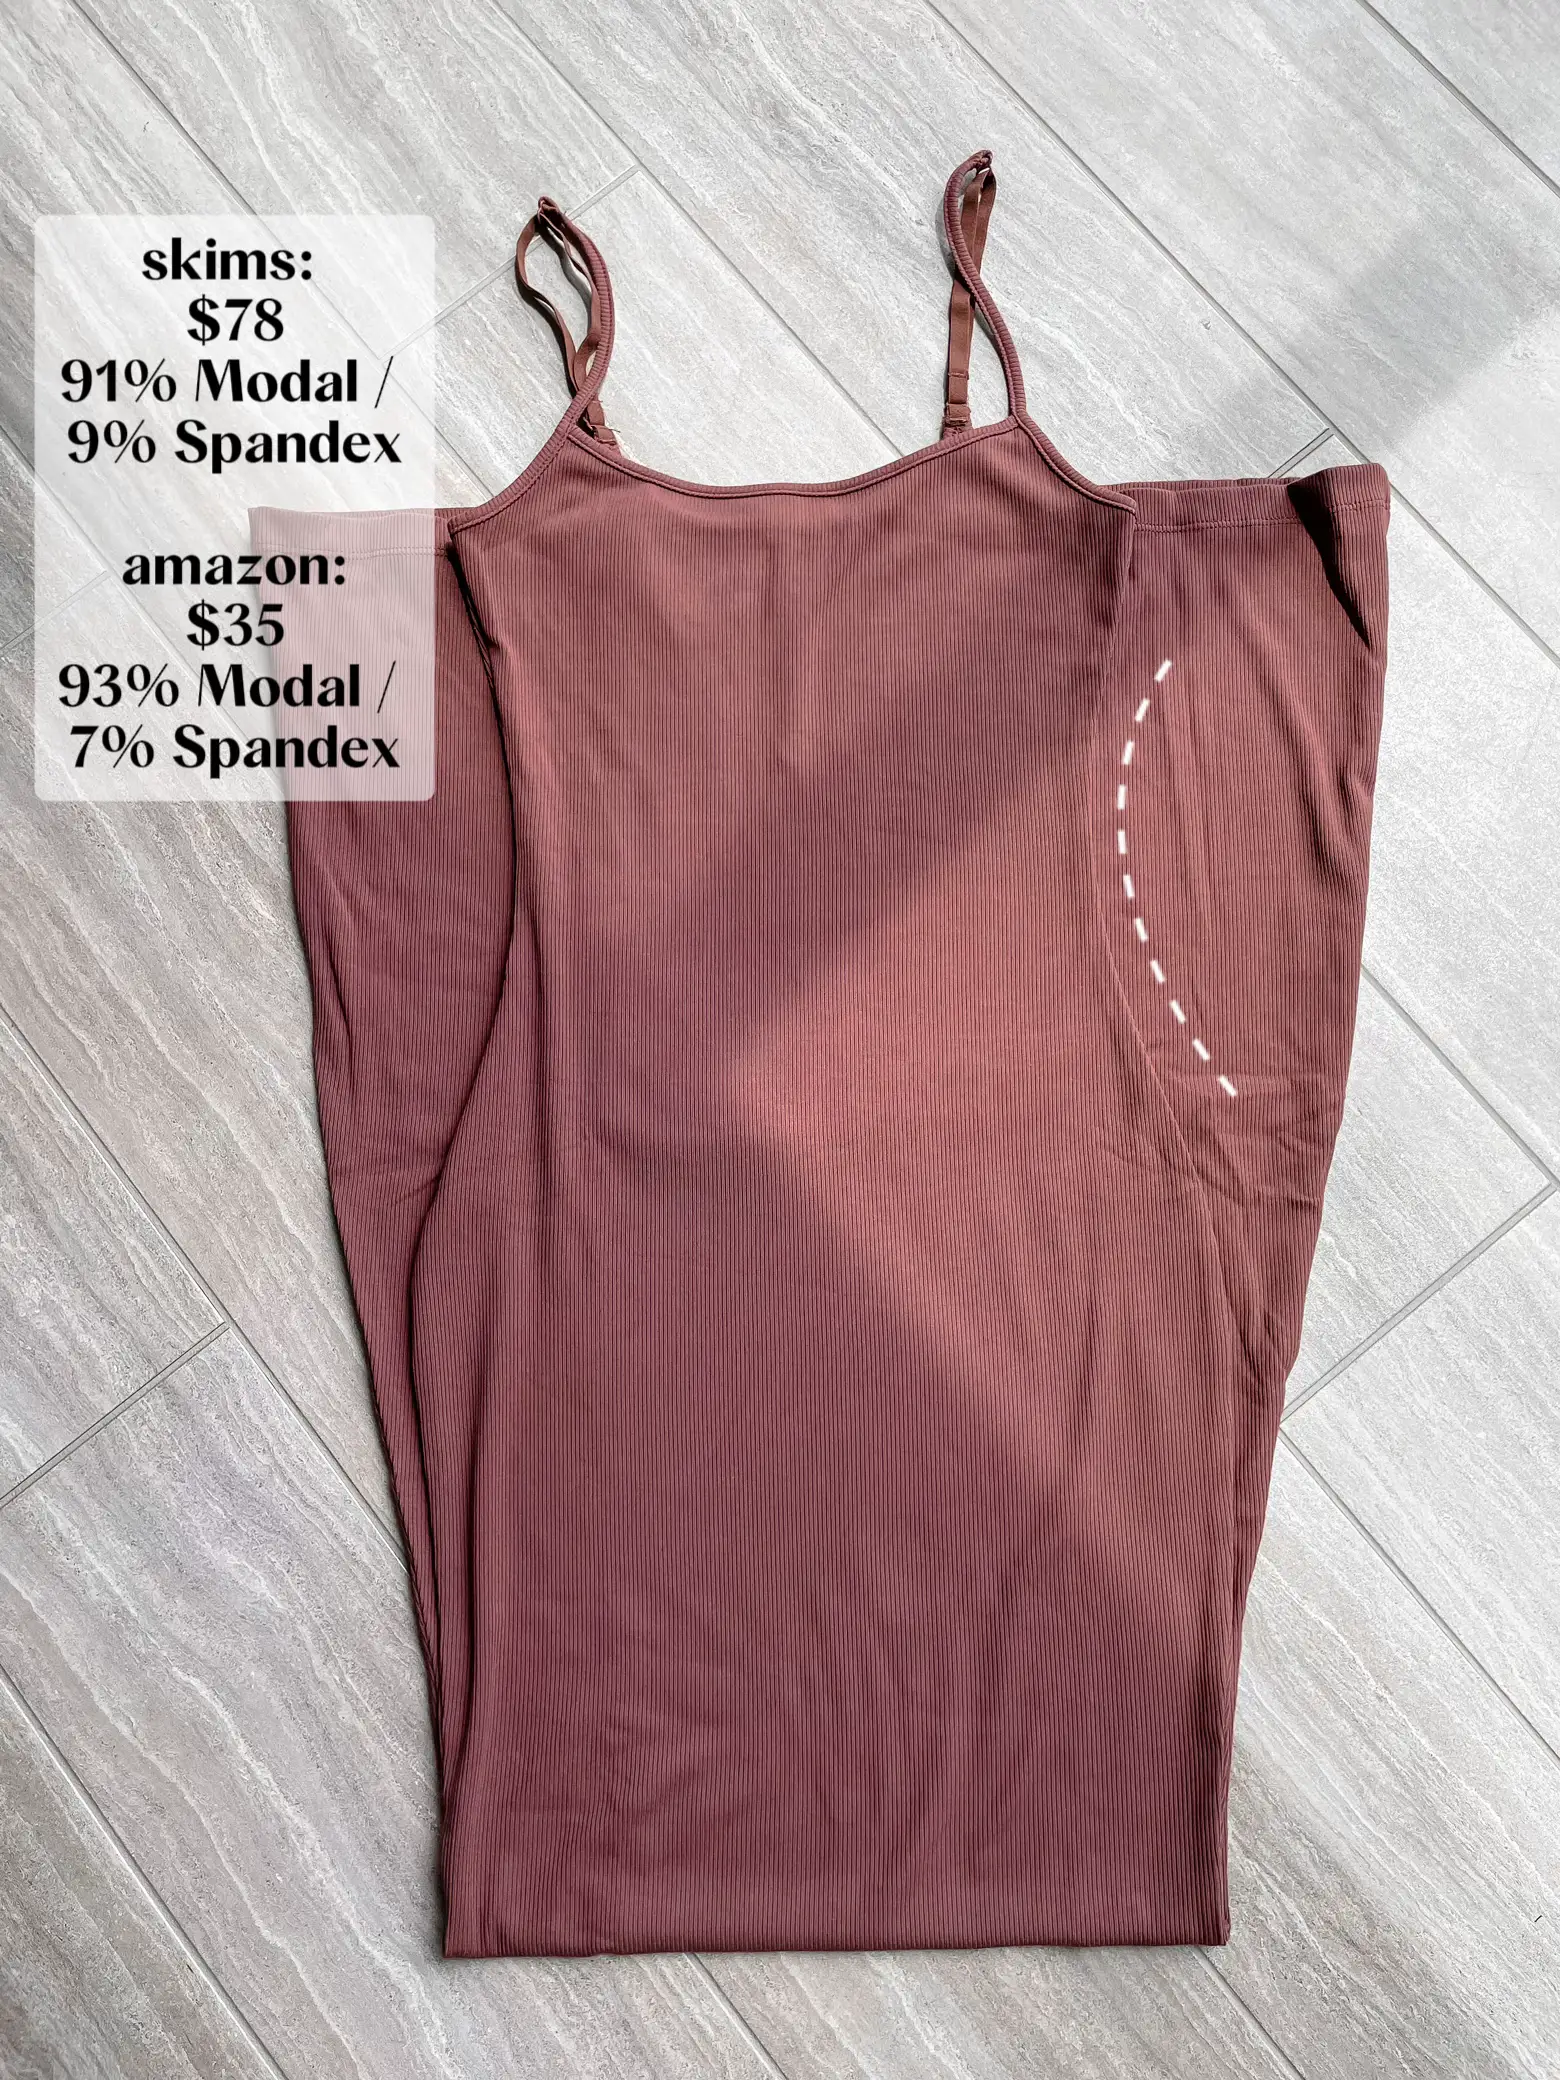 Ribbed Cami Crop Top (6 Pack) - 92% Nylon / 8% Spandex - Size Run